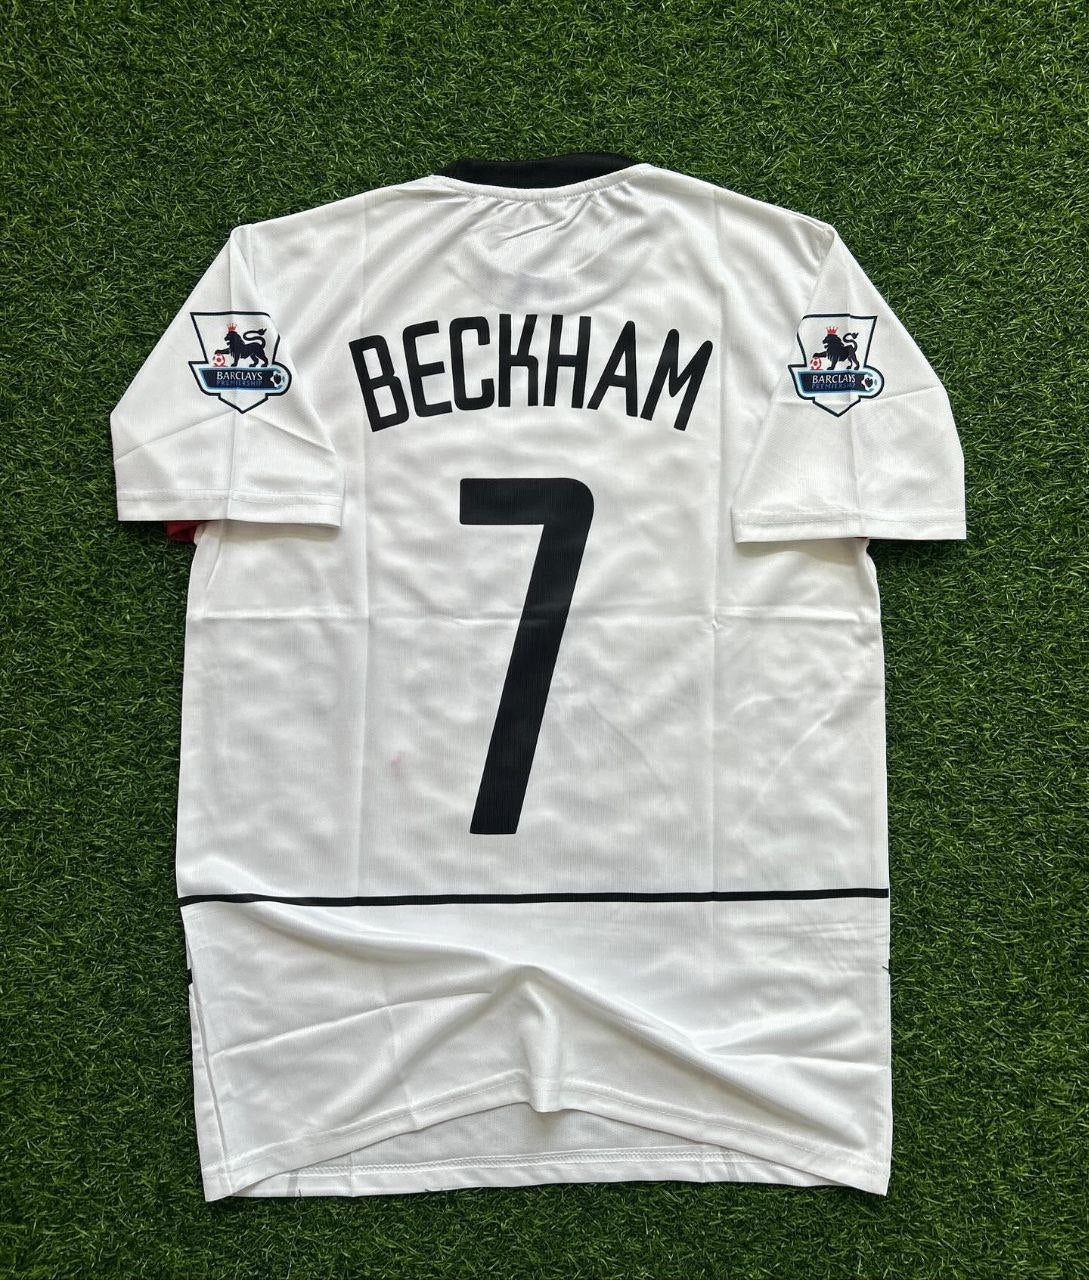 David Beckham Manchester United Beyaz Retro Forma